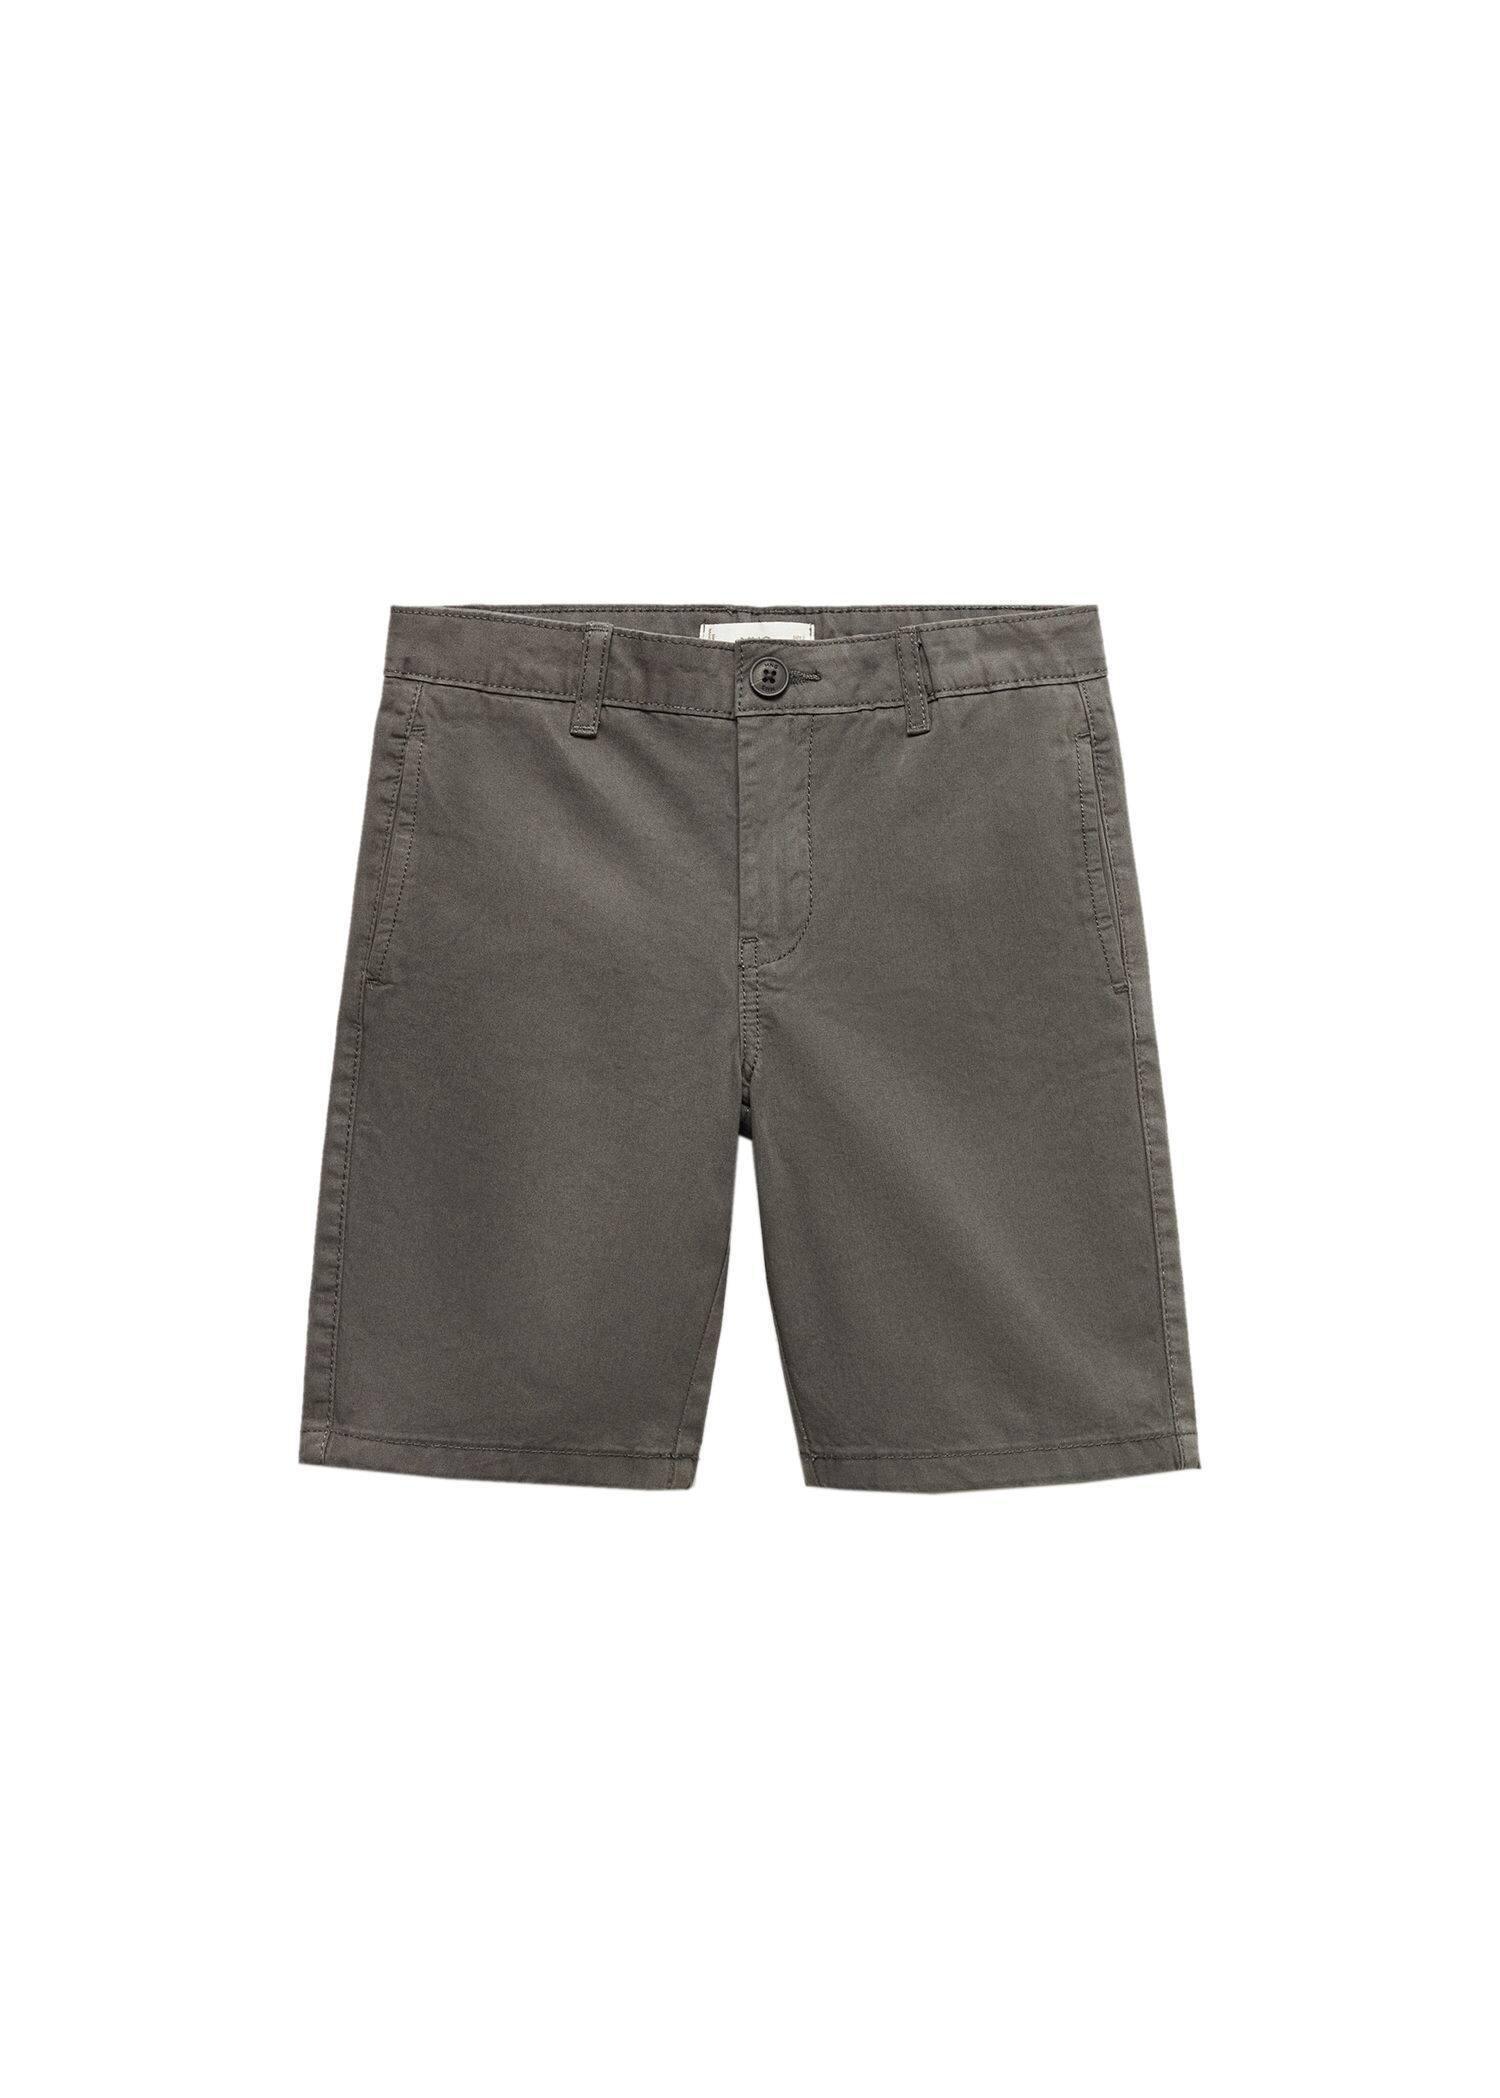 Mango - Grey Cotton Bermuda Shorts, Kids Boys